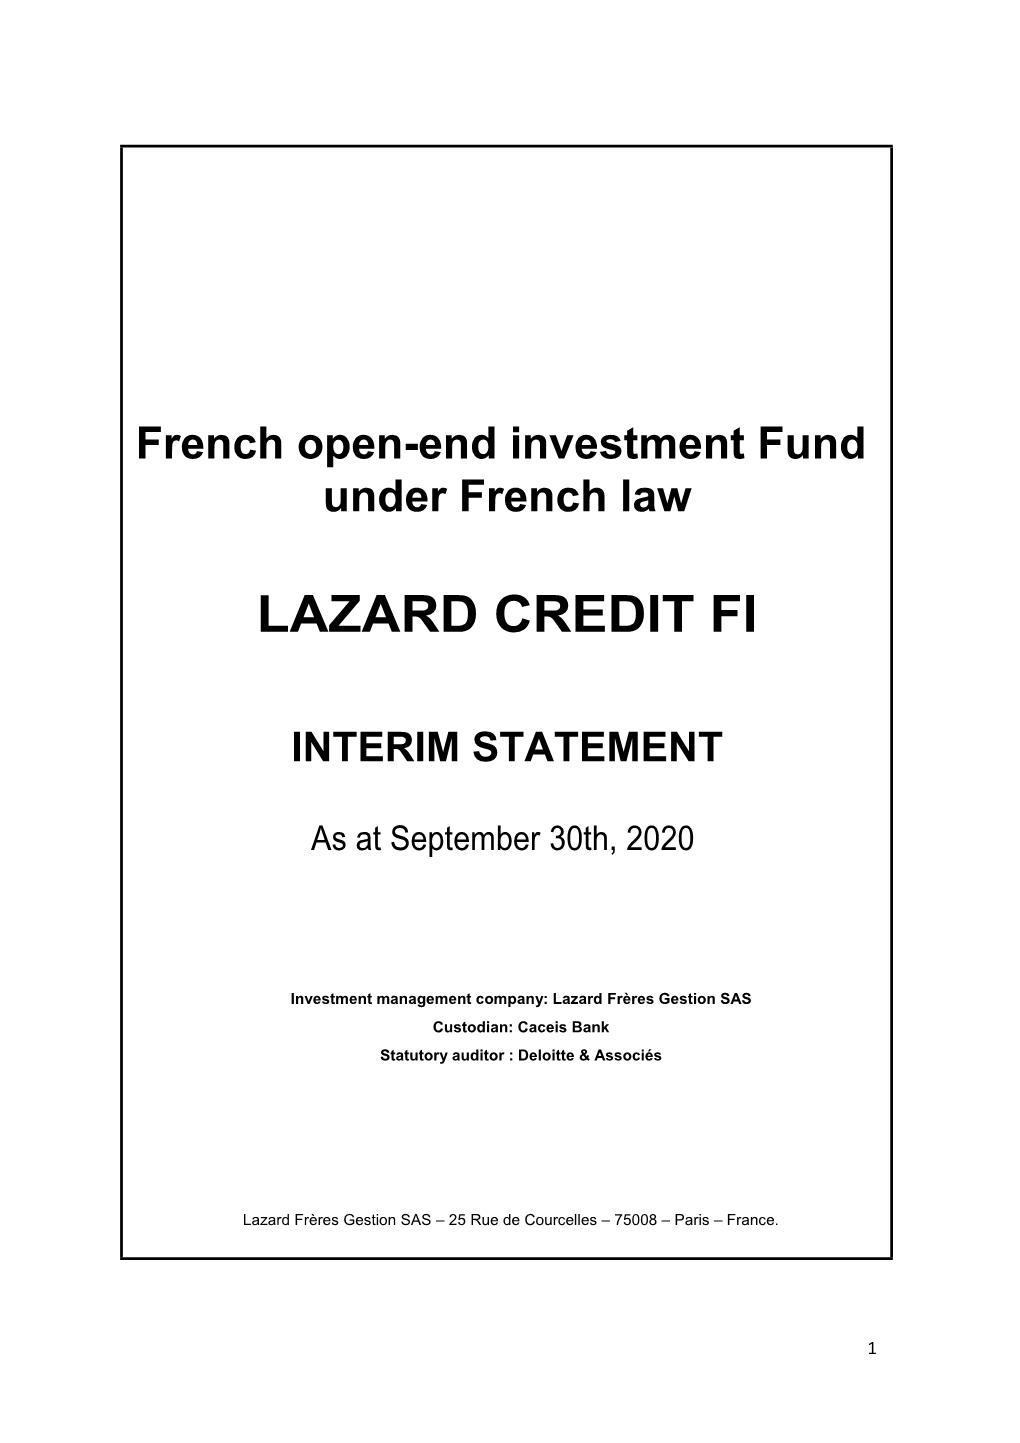 Lazard Credit Fi